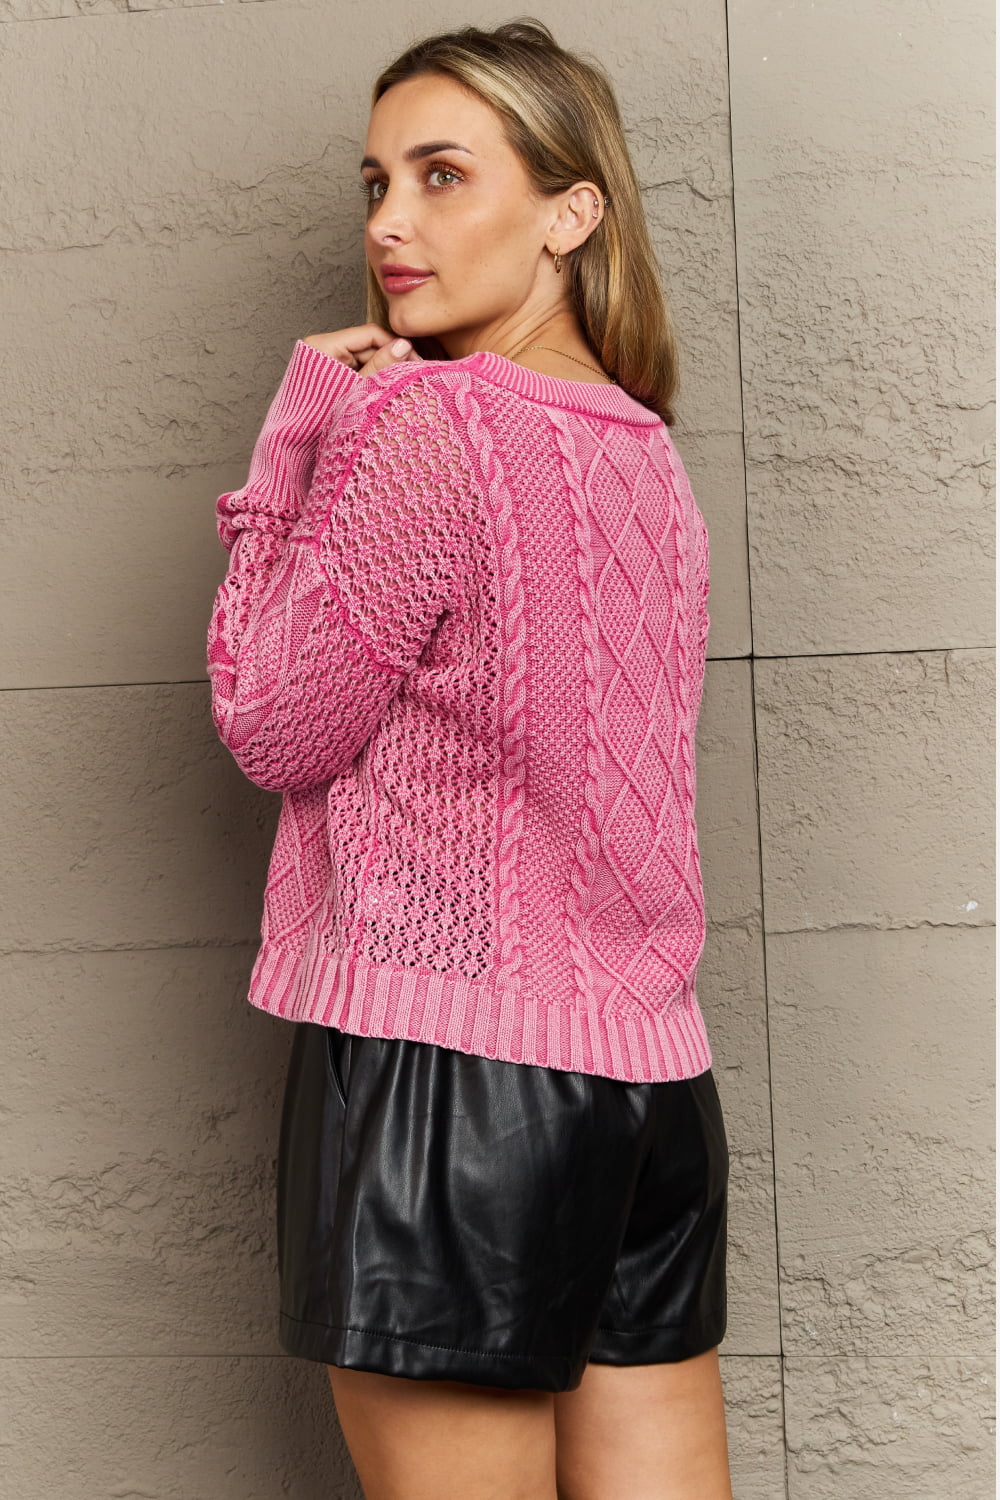 HEYSON Soft Focus Full Size Wash Cable Knit Cardigan in Fuchsia - TiffanyzKlozet